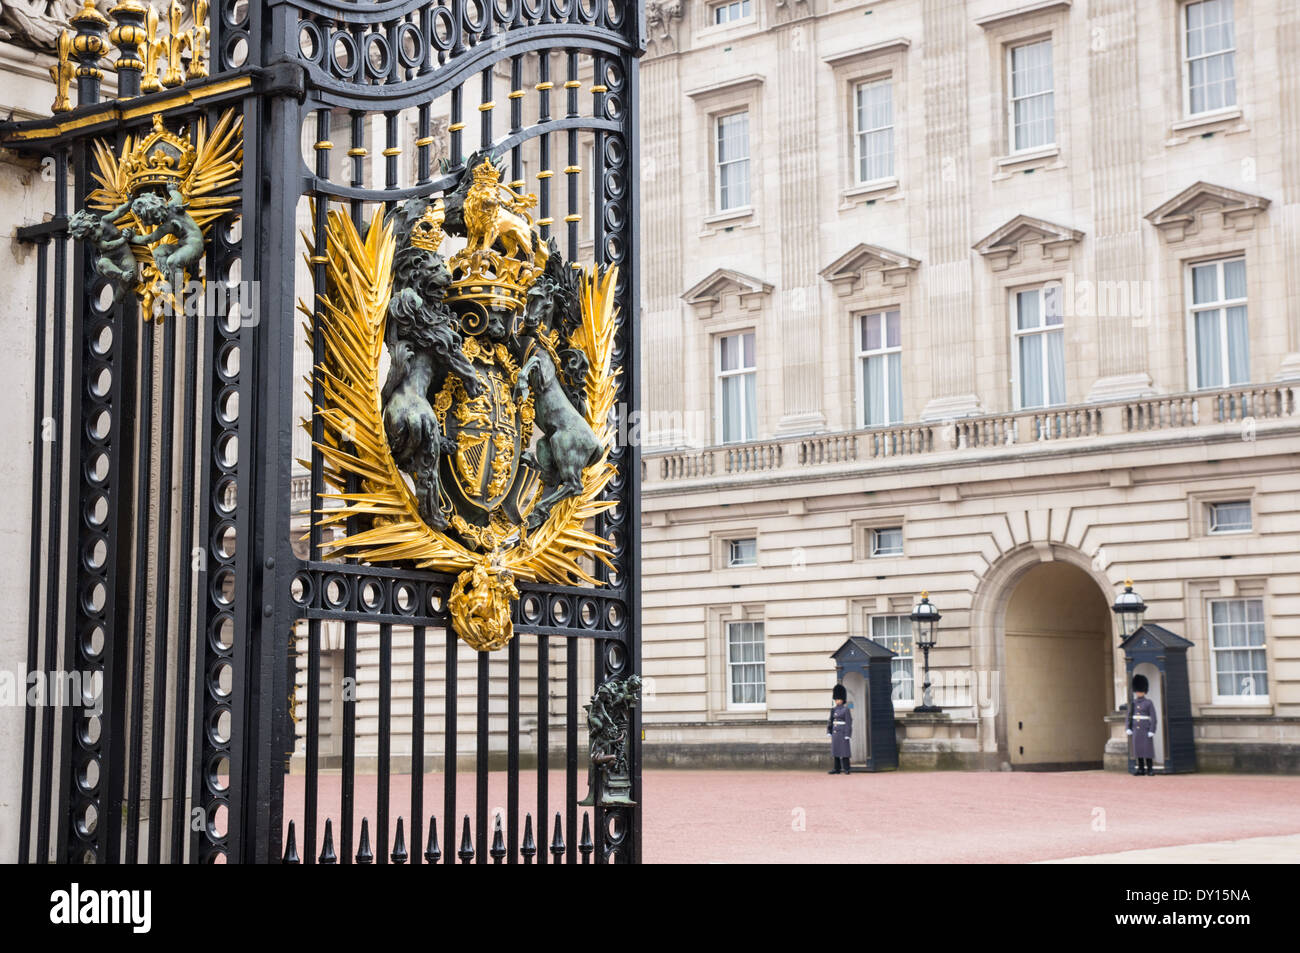 Buckingham Palace porte avec Royal Crest, armoiries royales du Royaume-Uni, Londres Angleterre Royaume-Uni Banque D'Images